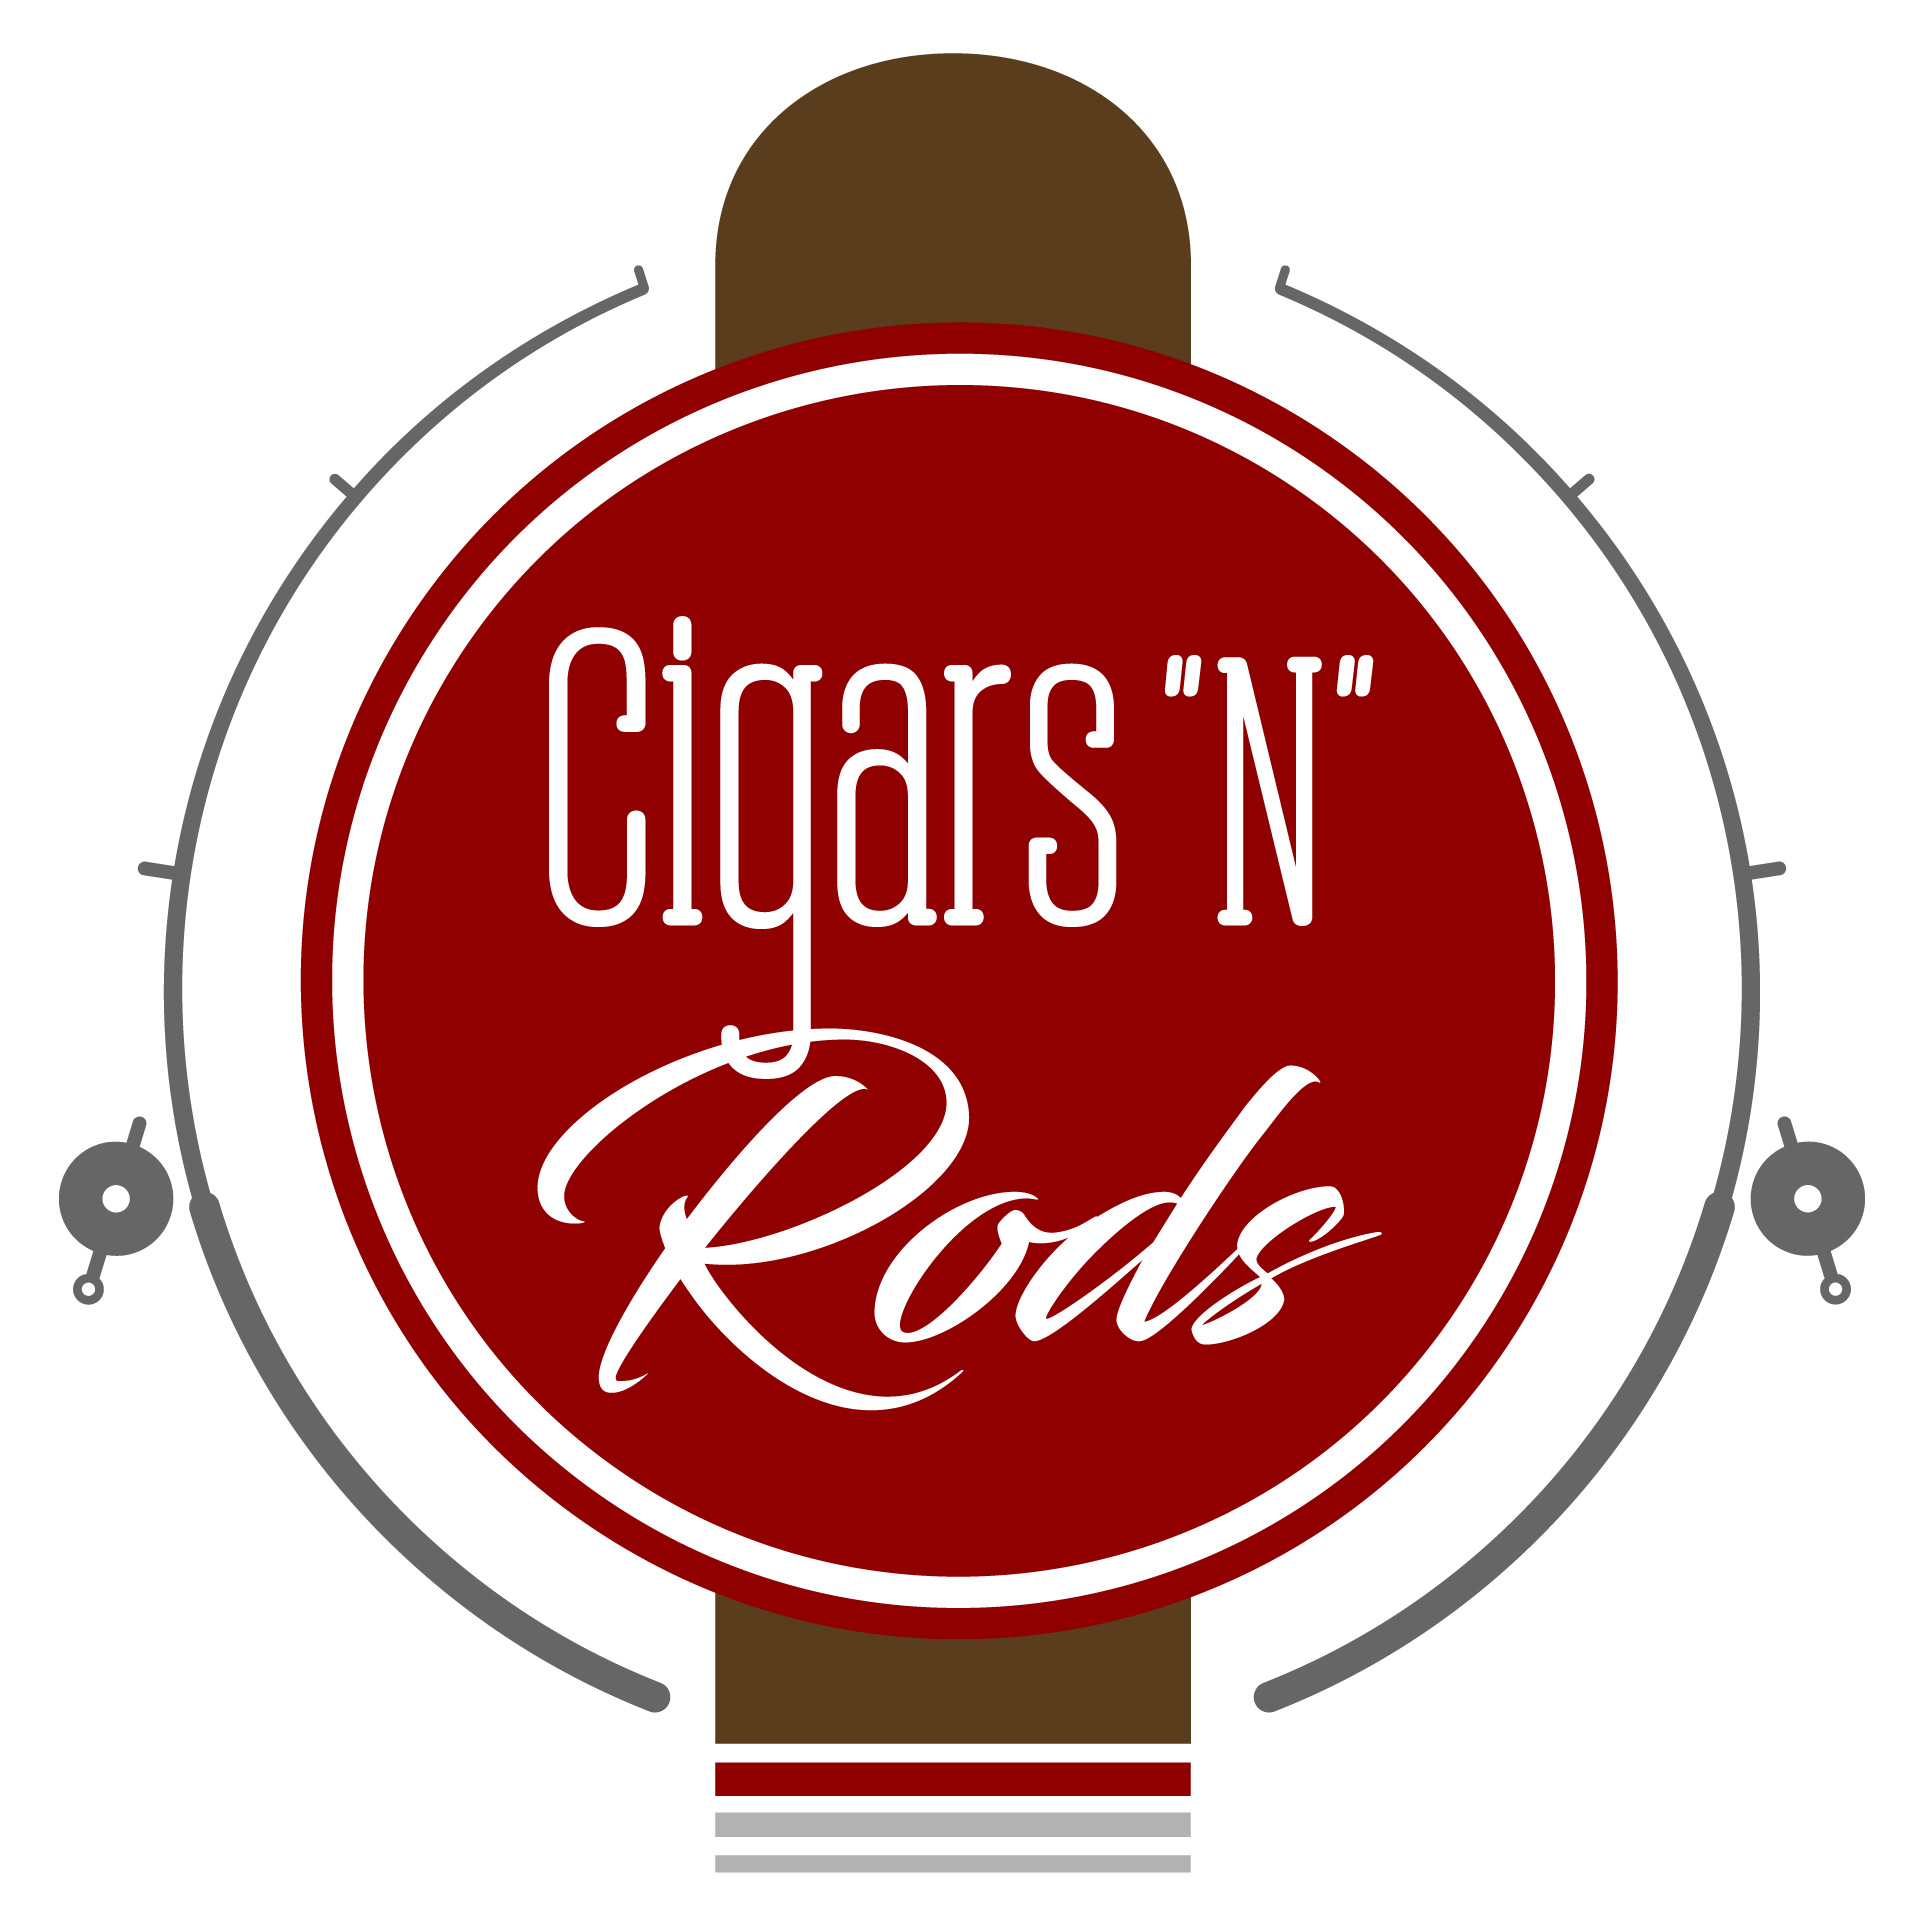 Cigars N Rods